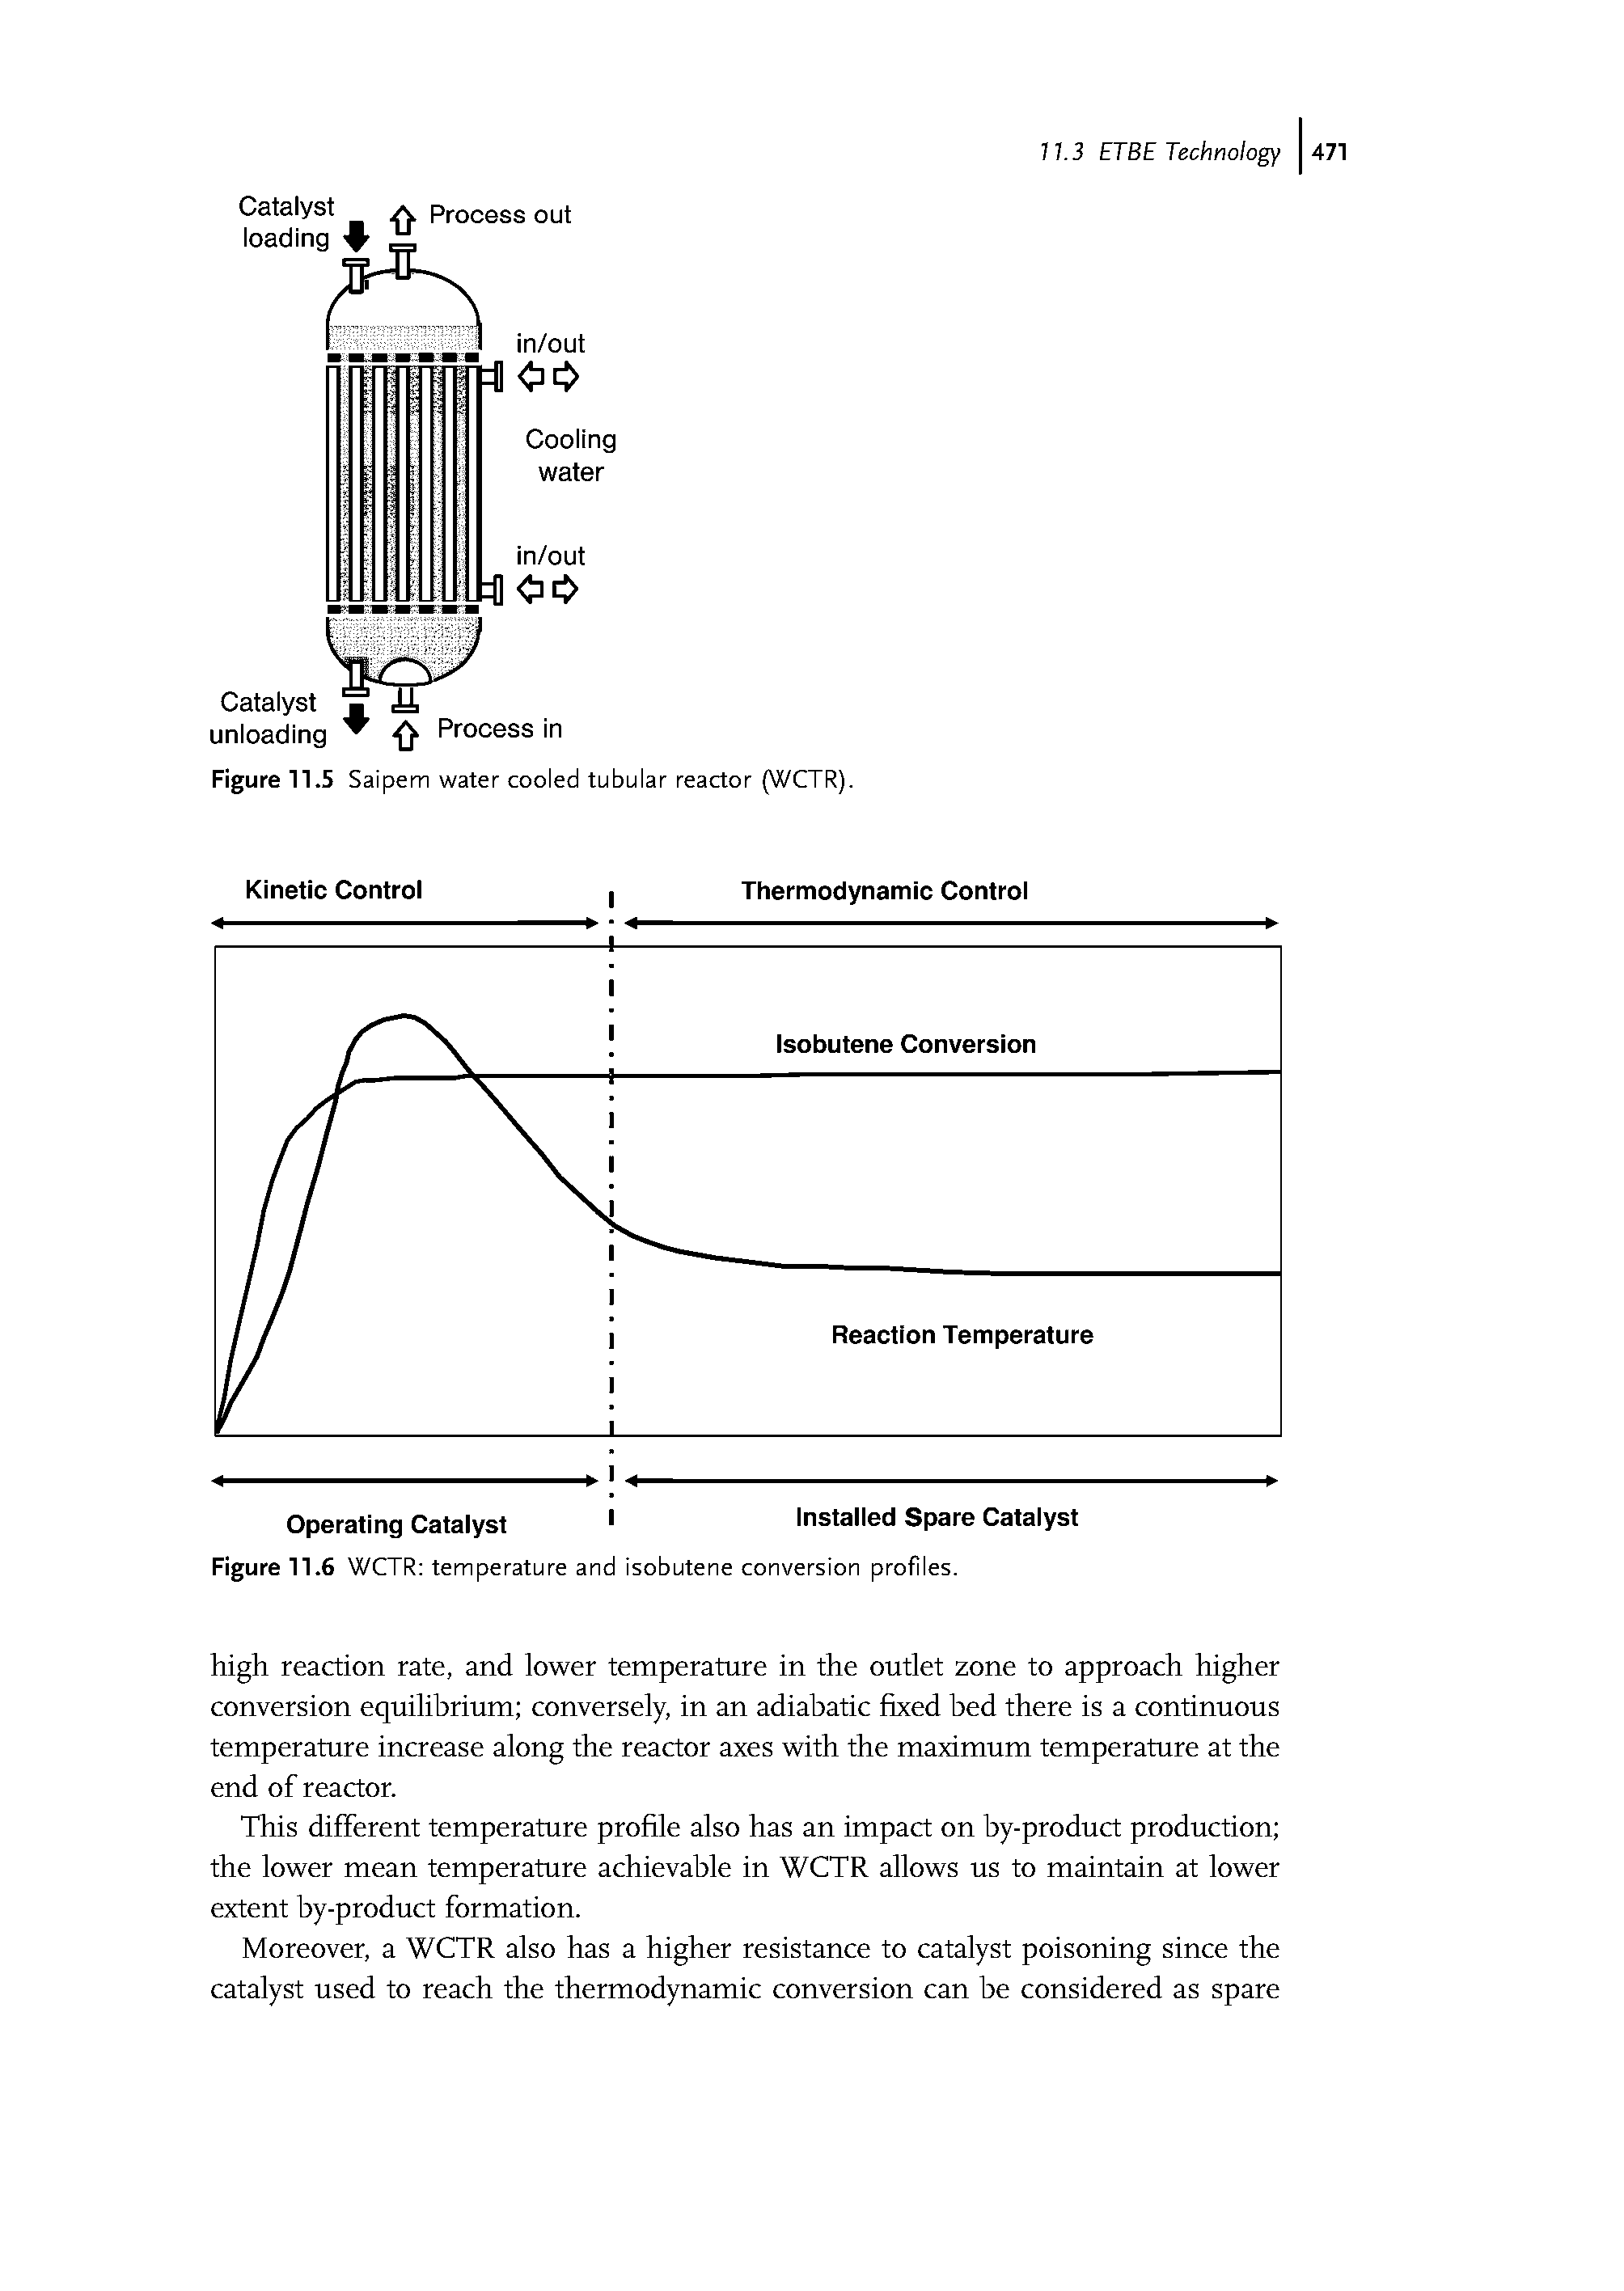 Figure 11.5 Saipem water cooled tubular reactor (WCTR).